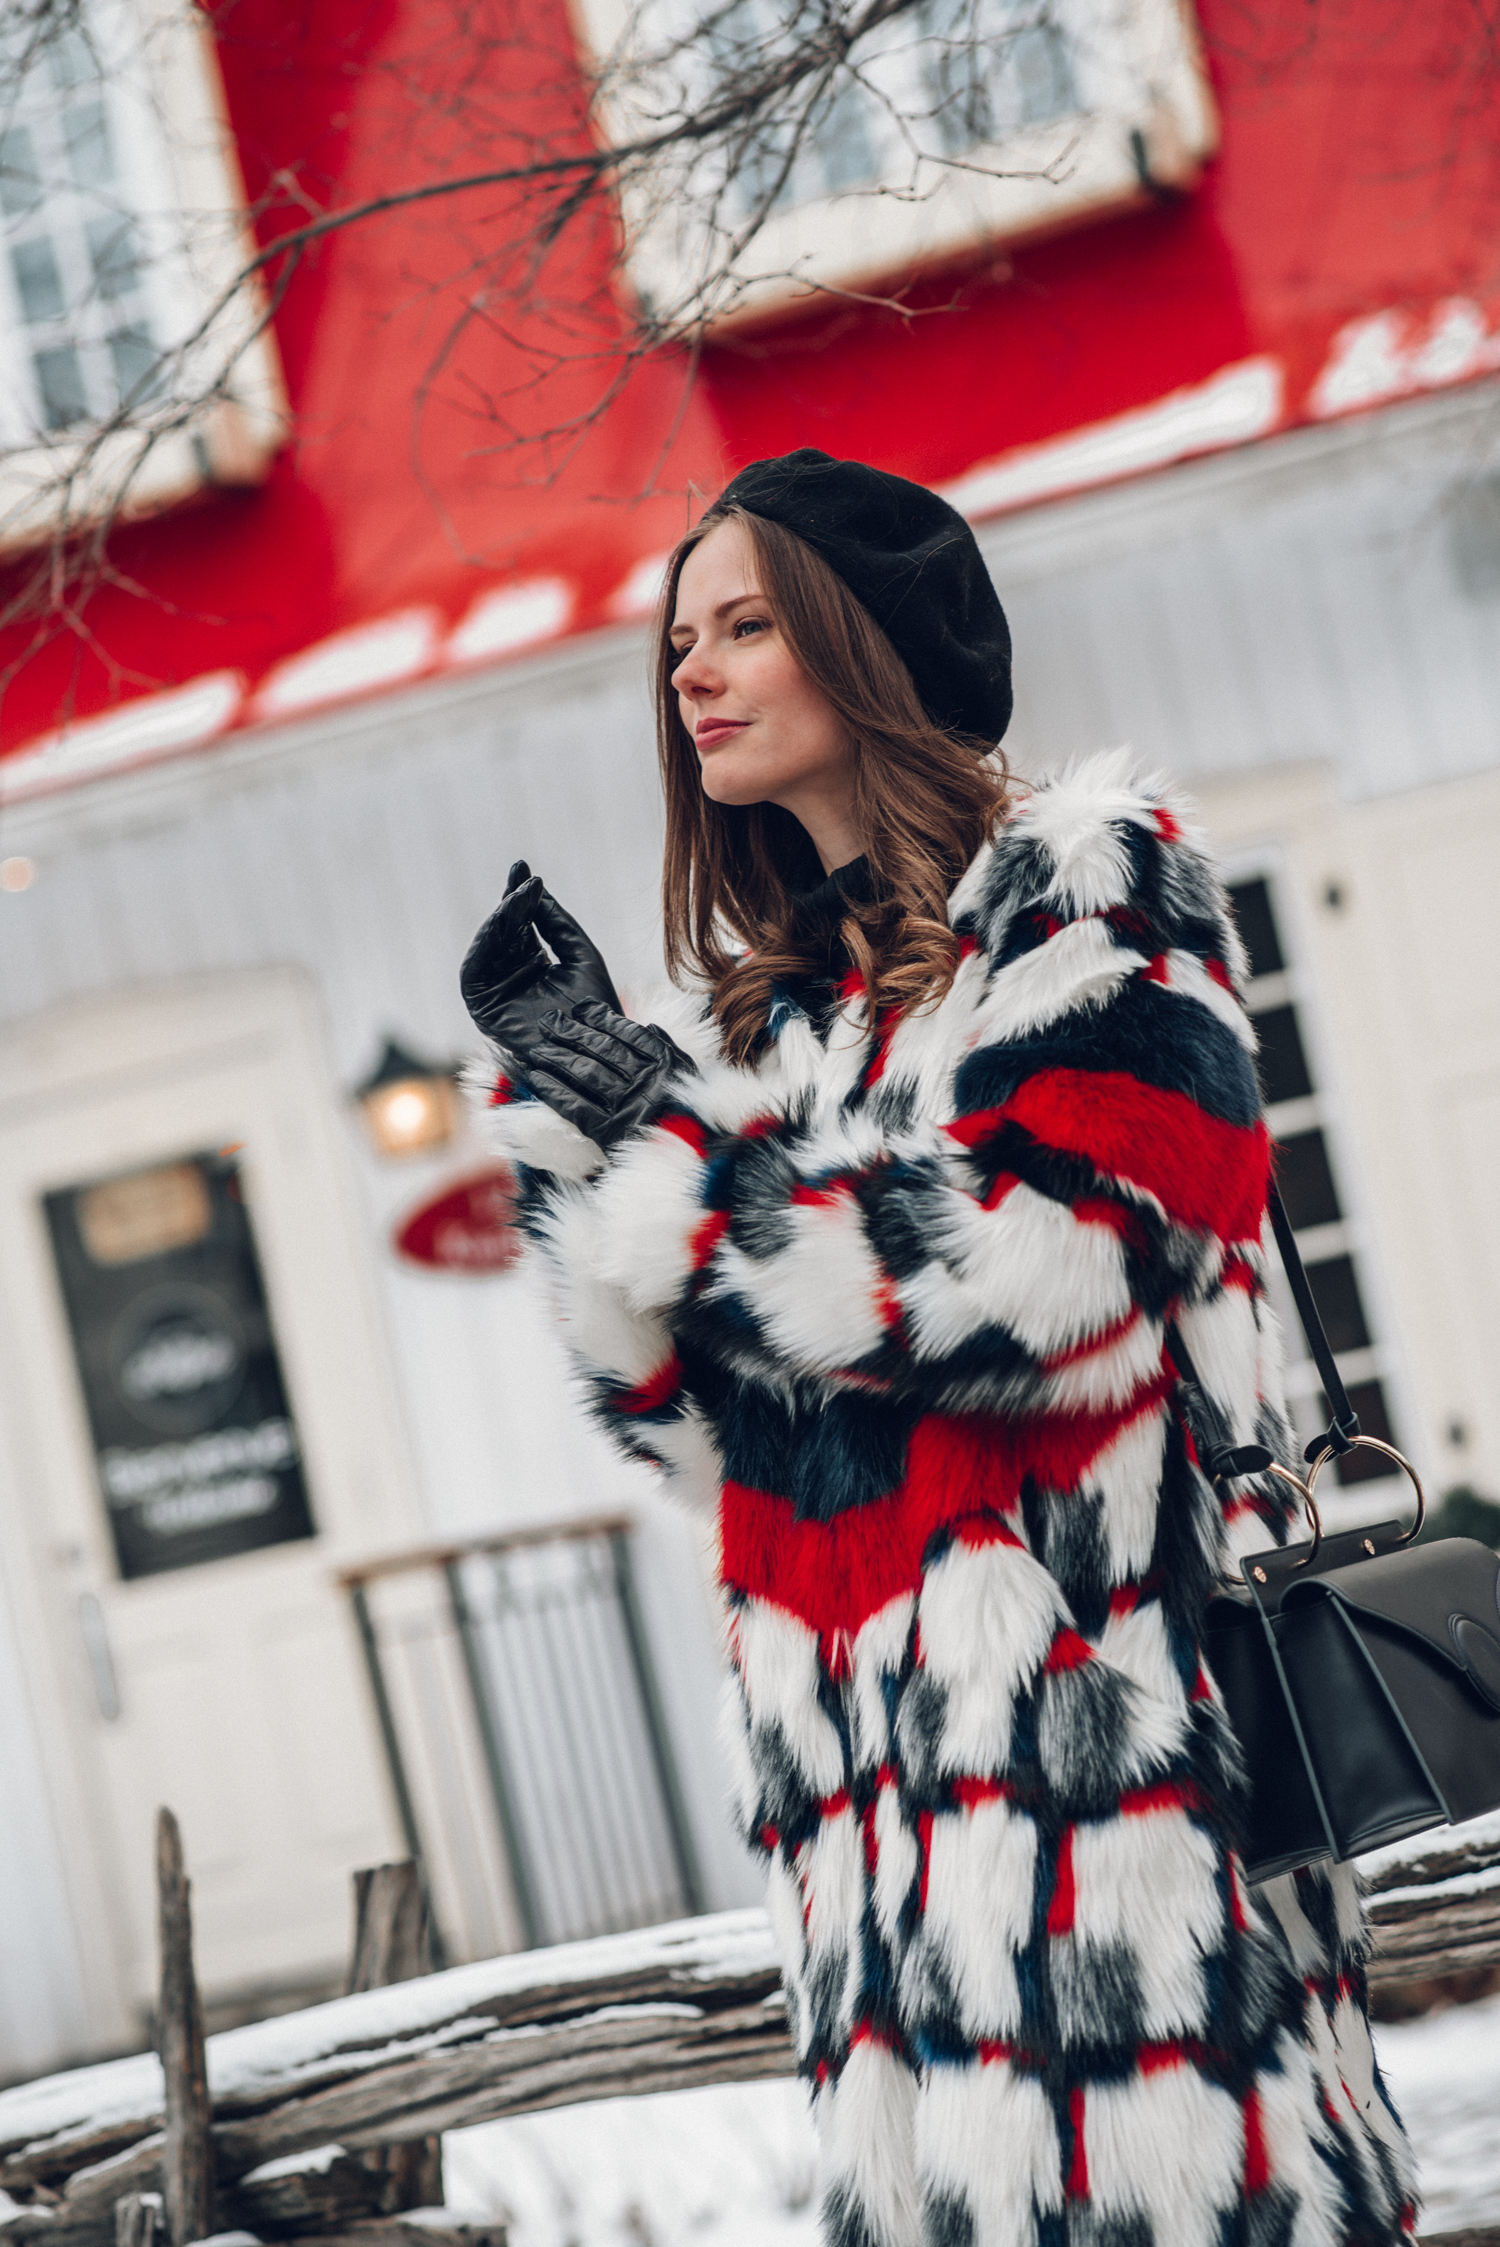 Alyssa Campanella of The A List blog shares glamorous faux fur coats wearing Urbancode London faux fur coat